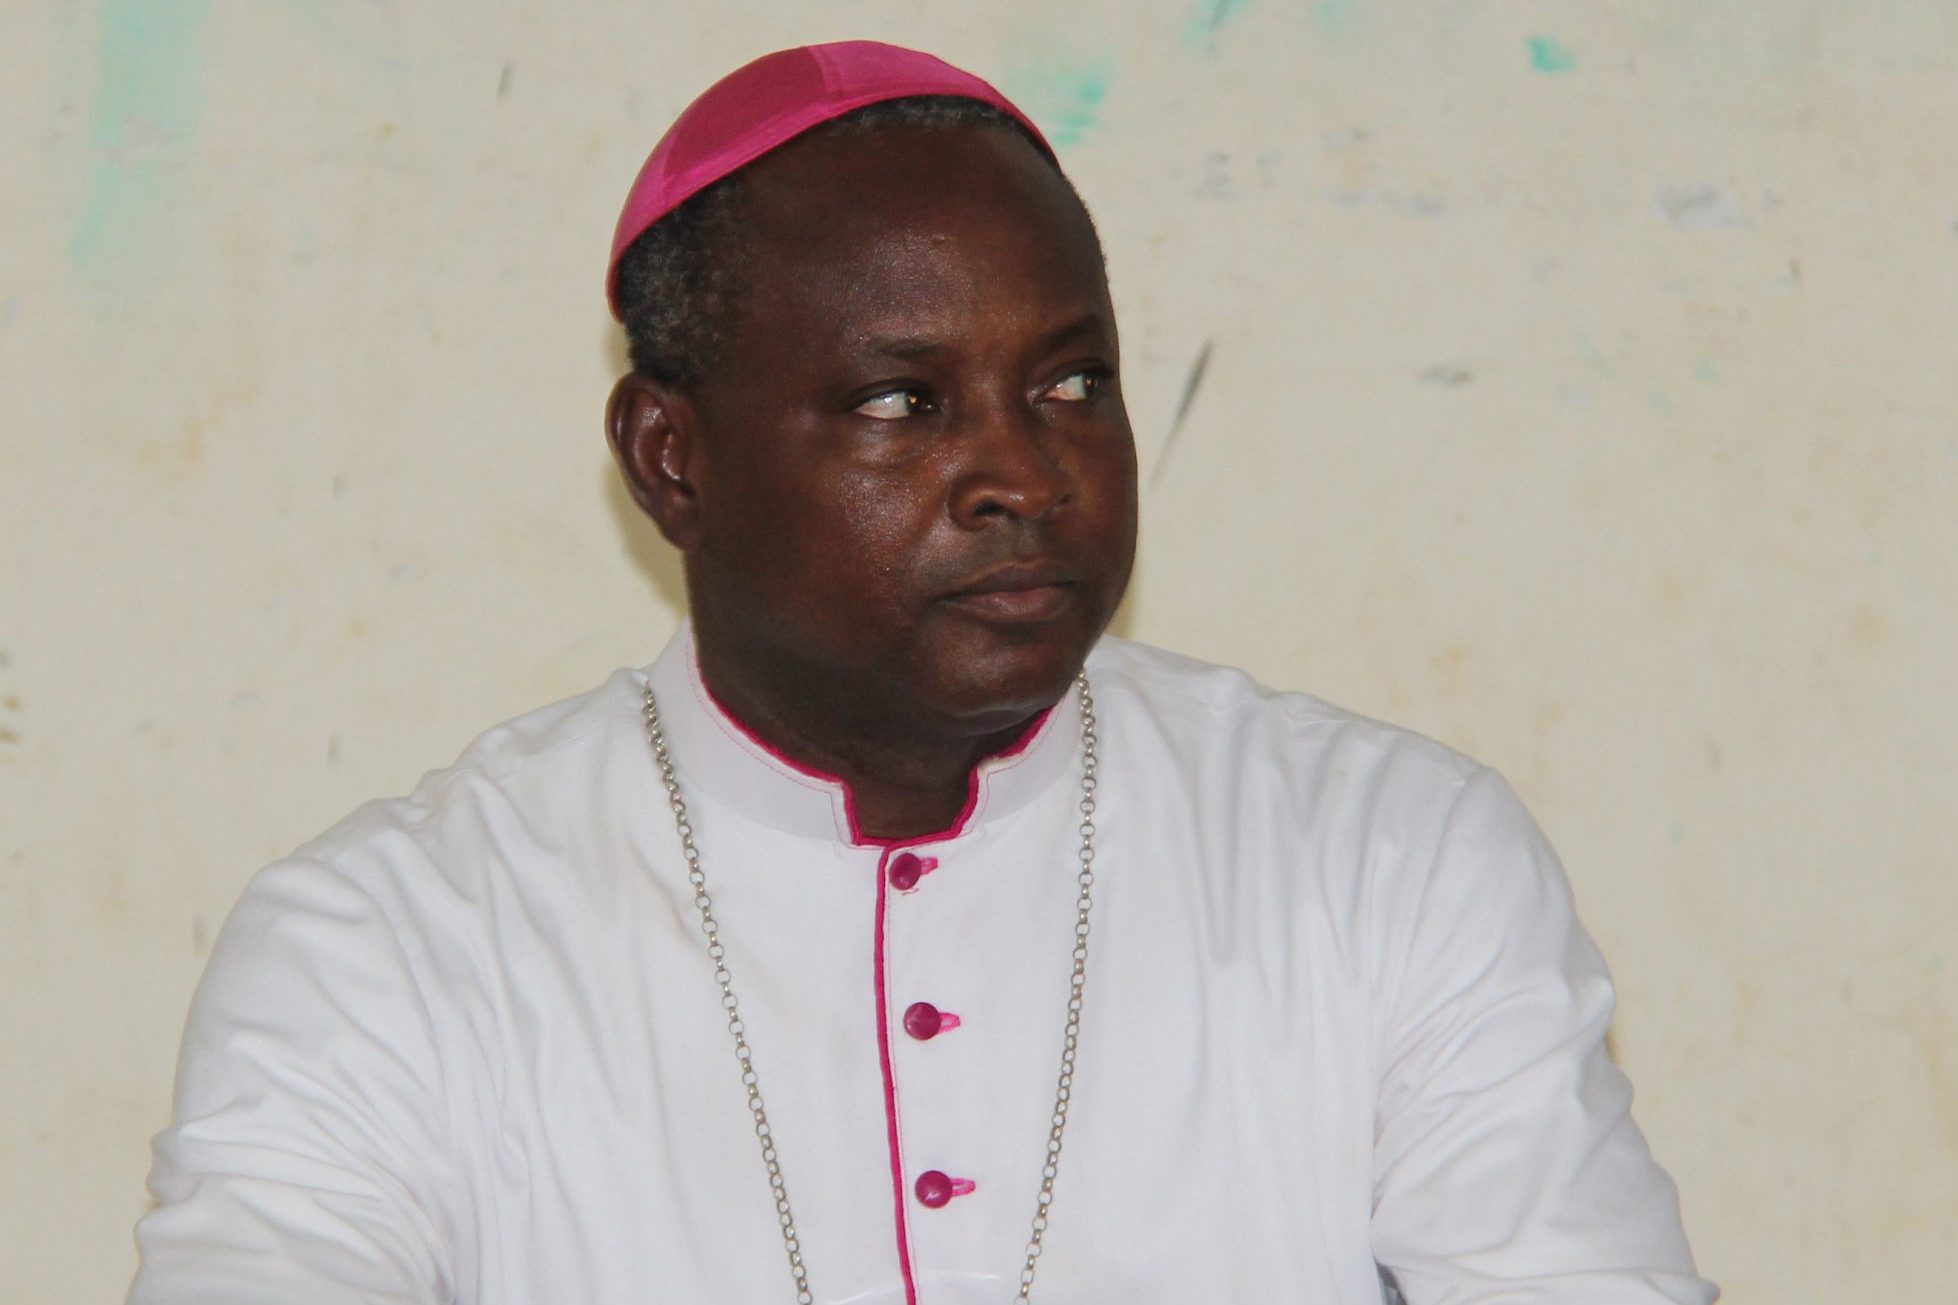 Bishop Laurent Birfuoré Dabiré of Dori